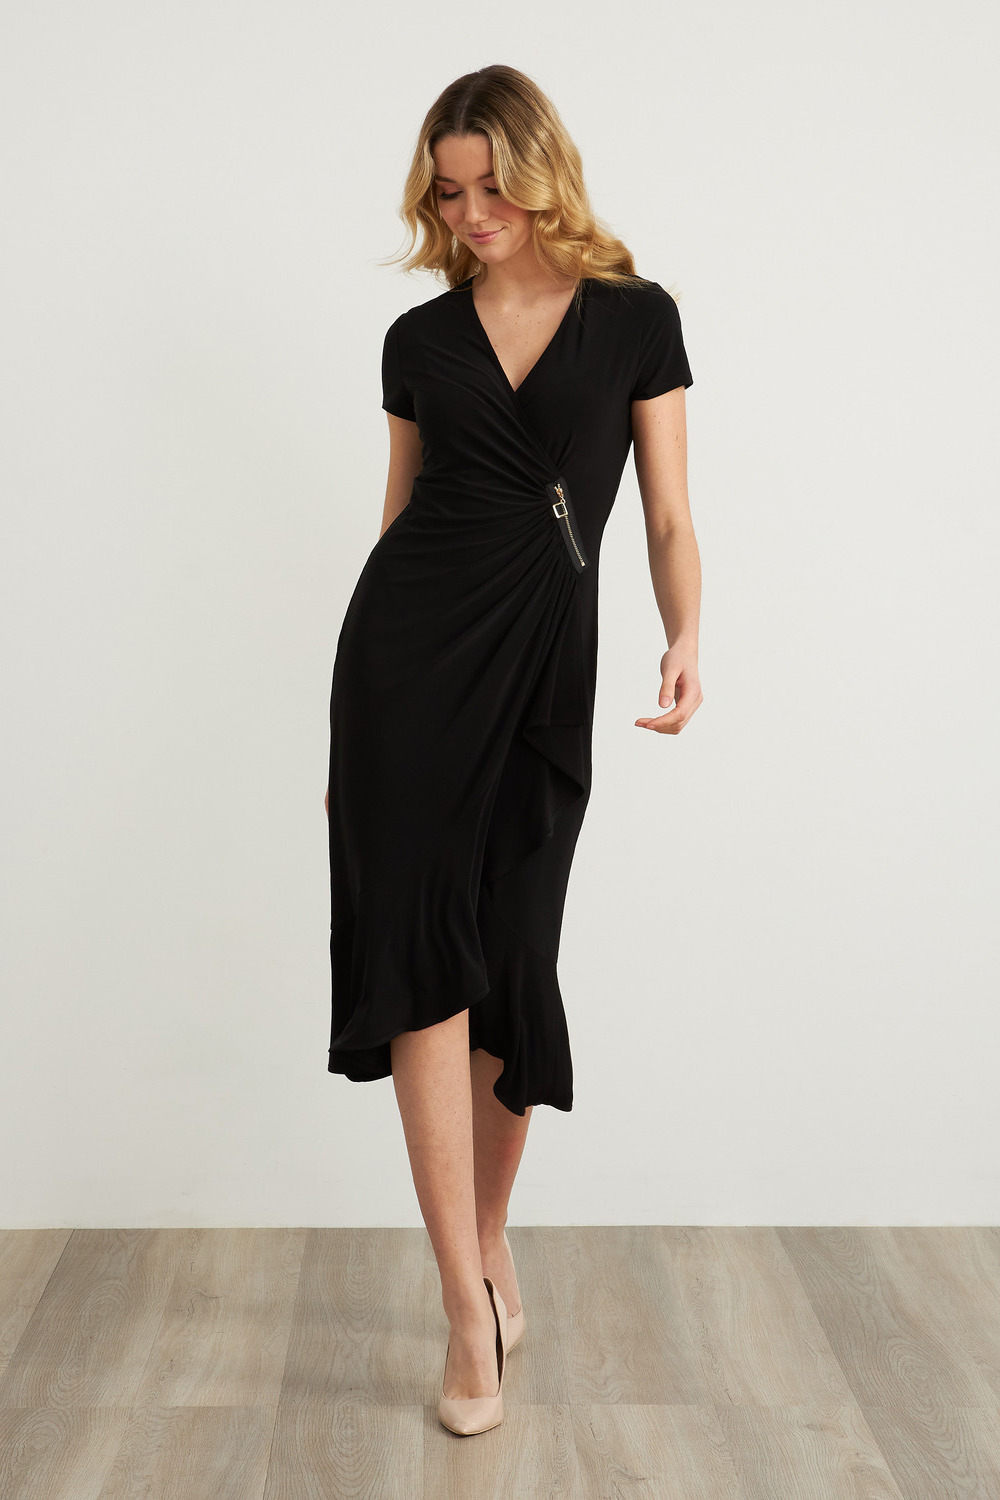 Joseph Ribkoff Dress Style 211131. Black